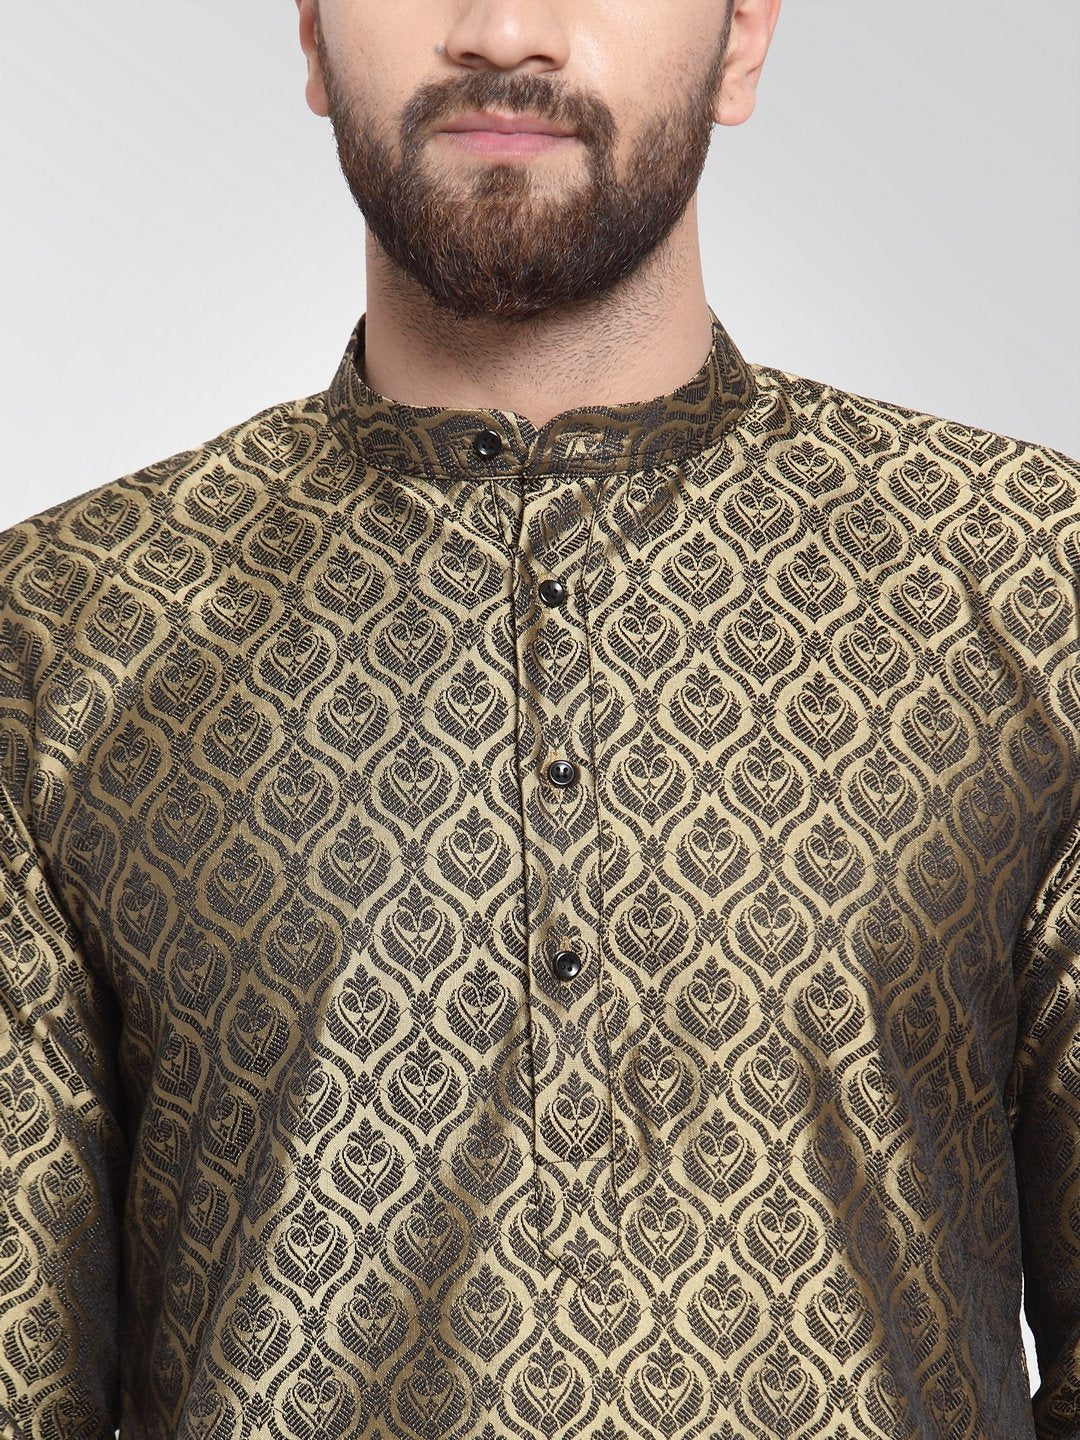 Men's Gold-Colored & Black Self Design Kurta with Churidar ( JOKP 584 Golden ) - Virat Fashions